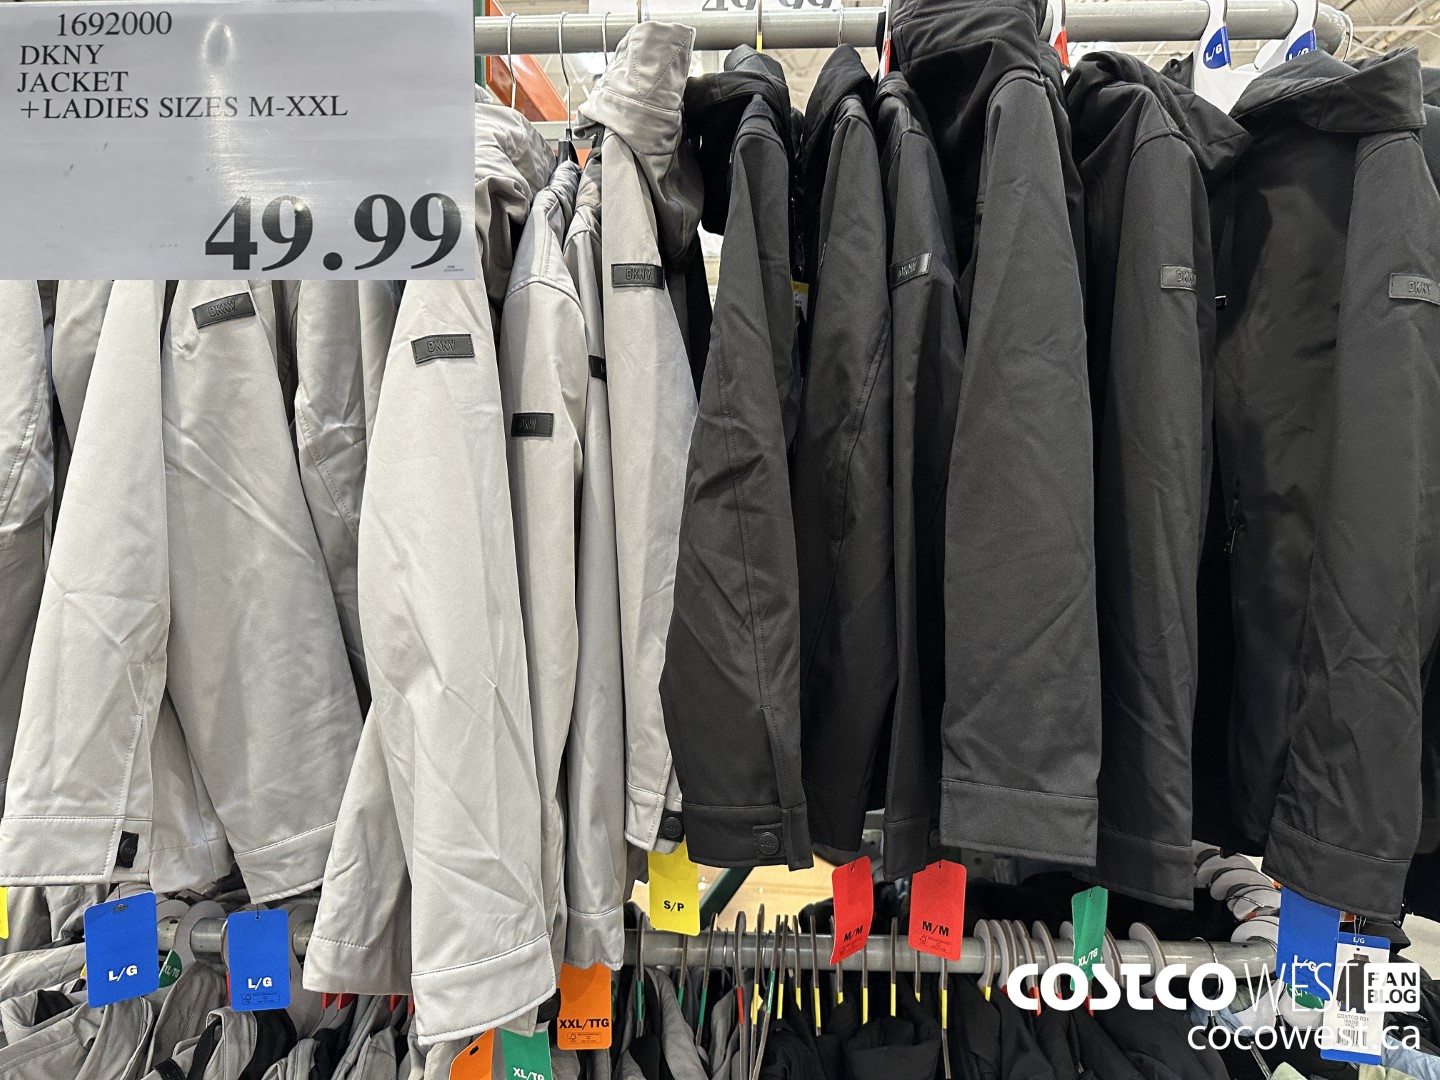 Costco Clothing: The Comfiest Leggings, PJs, Bras & More